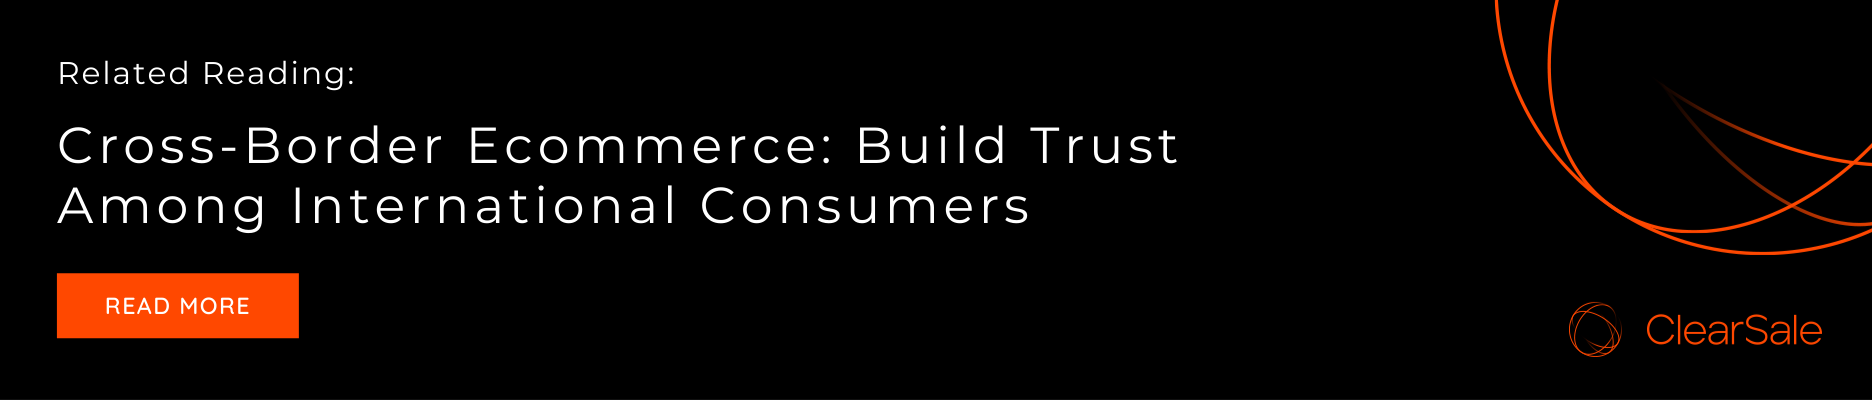 Cross-Border Ecommerce: Build Trust Among International Consumers